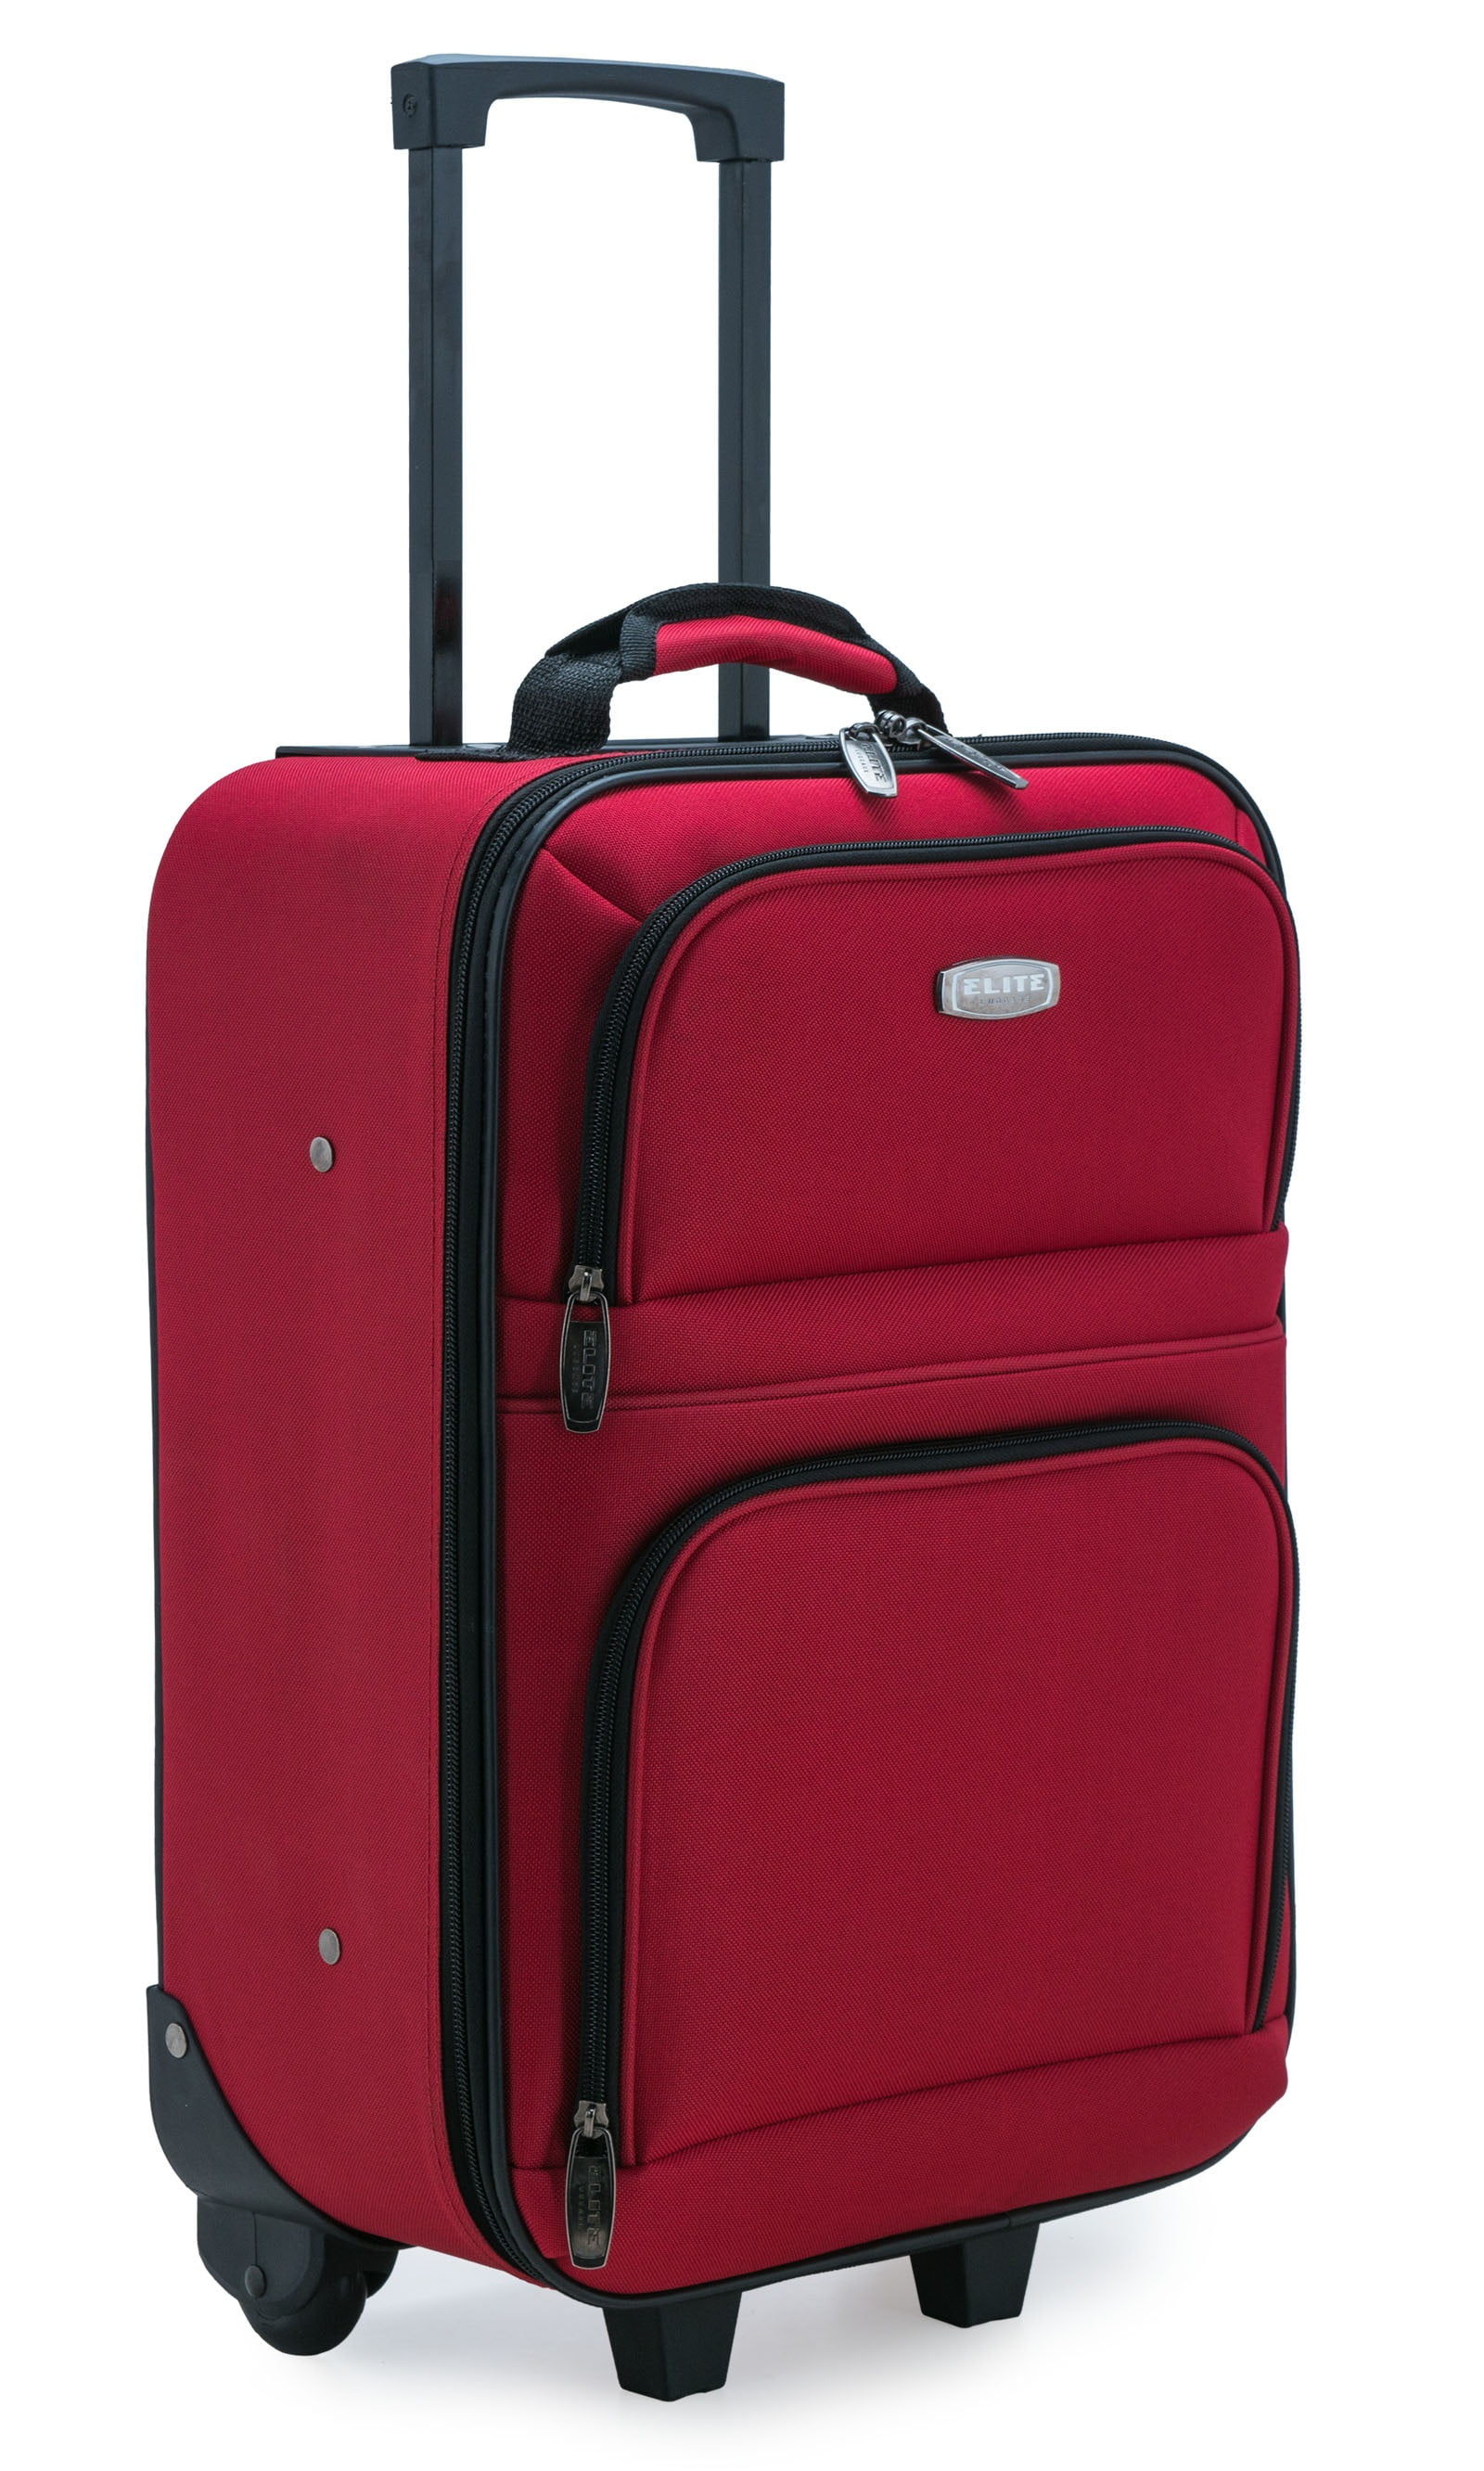 Elite Luggage - Elite Luggage Meander 19.5